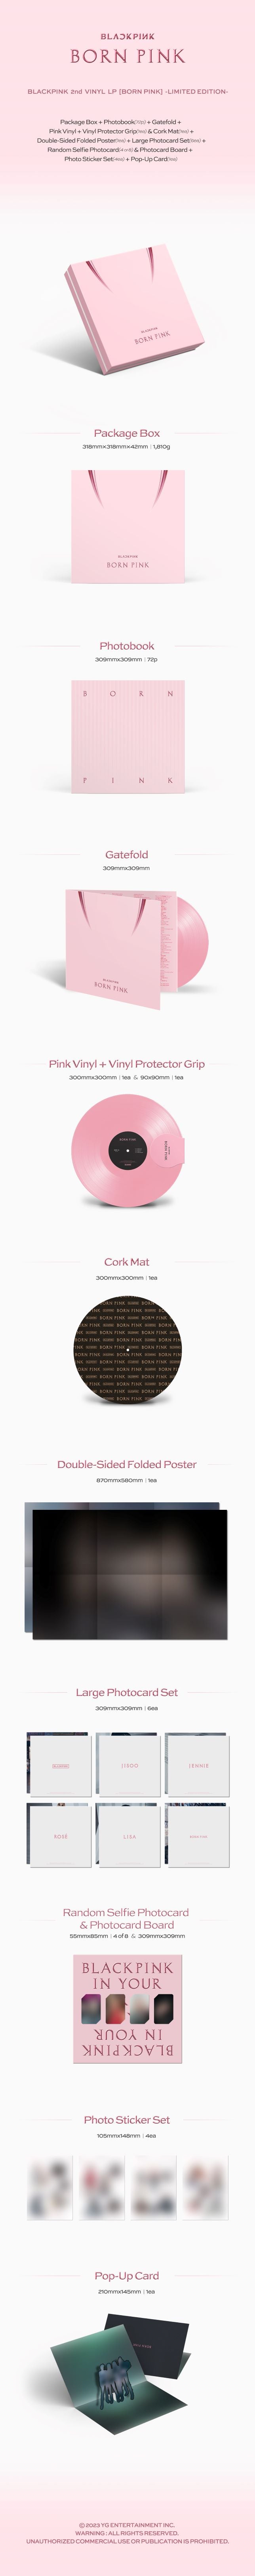 Blackpink-Born-Pink-Vinyl-LP-Limited-Edition-Detail